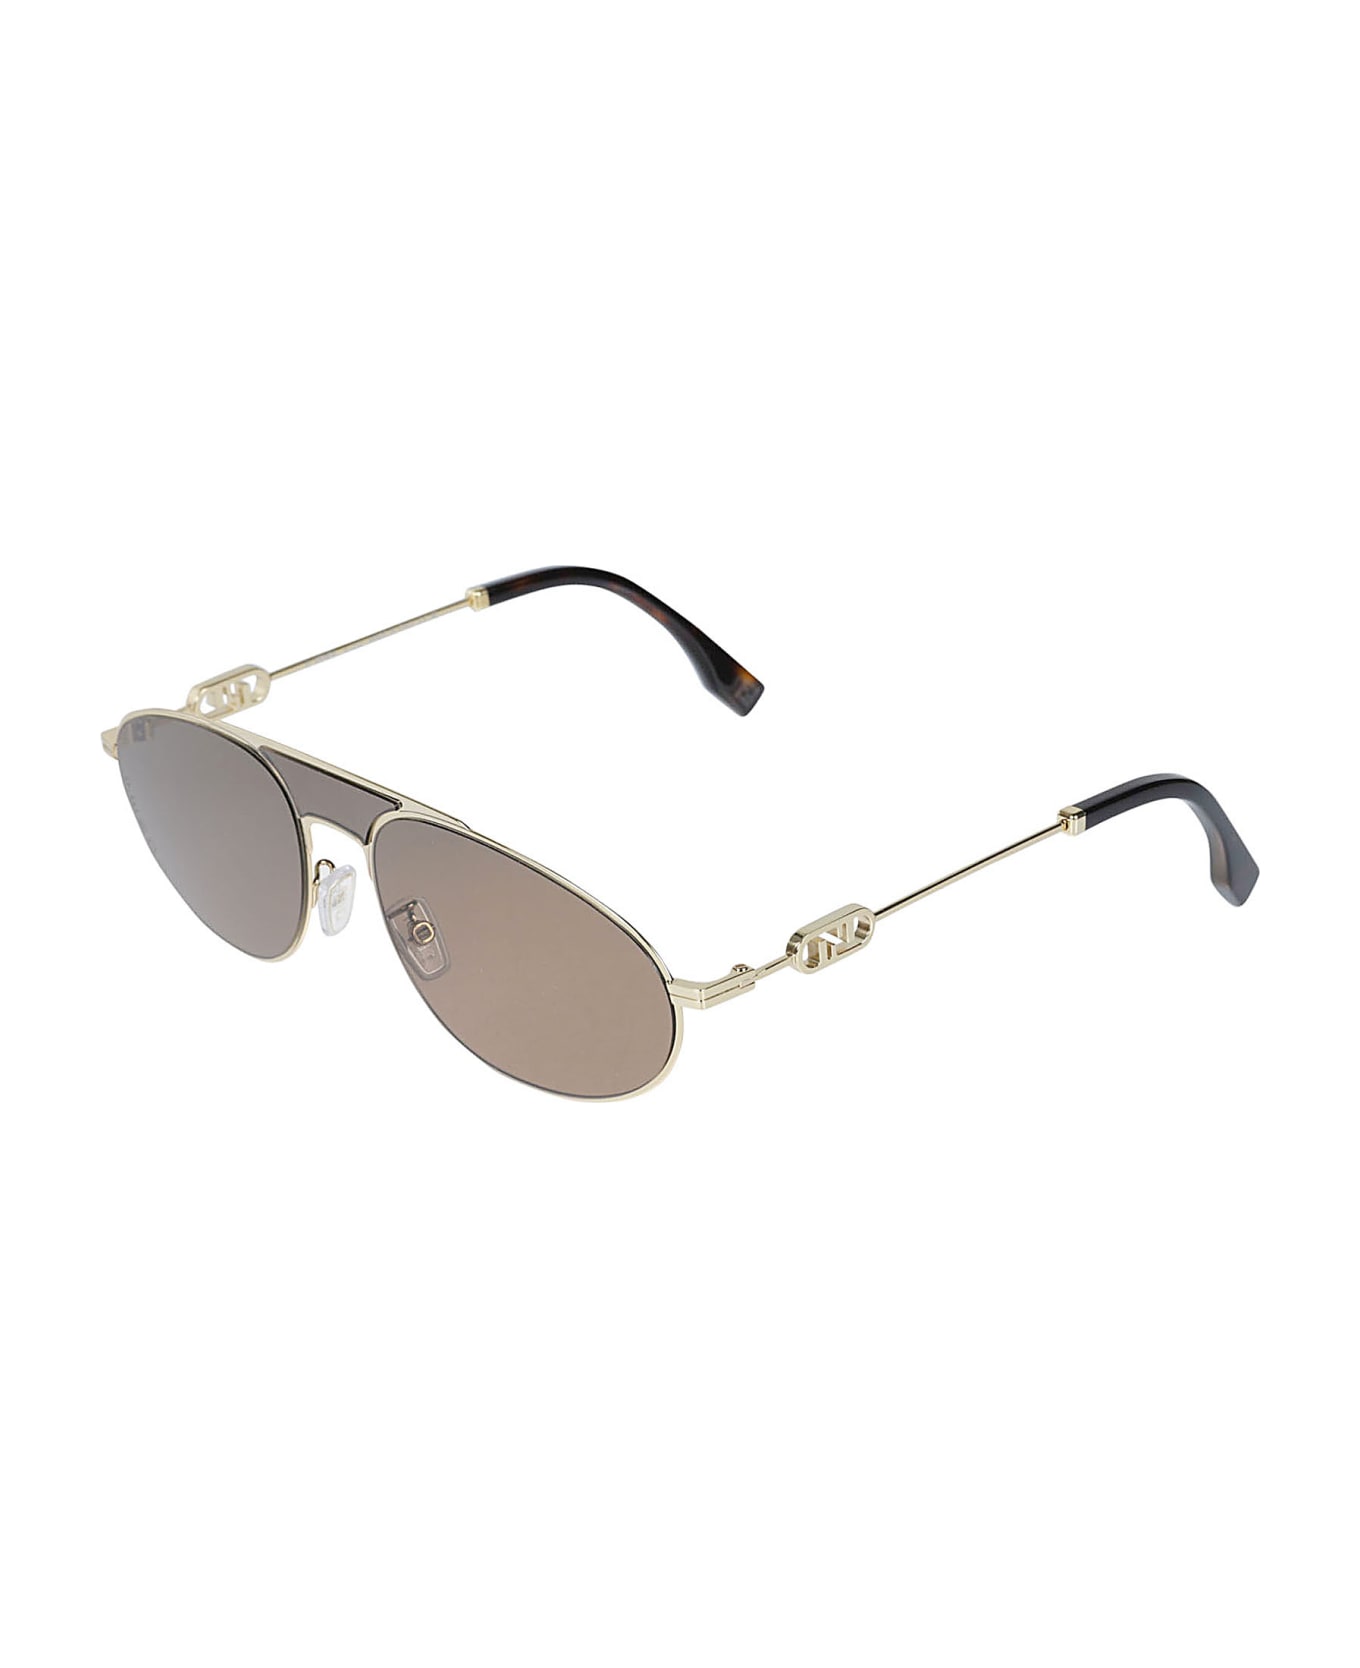 Fendi Eyewear Oval Aviator Sunglasses - N/A